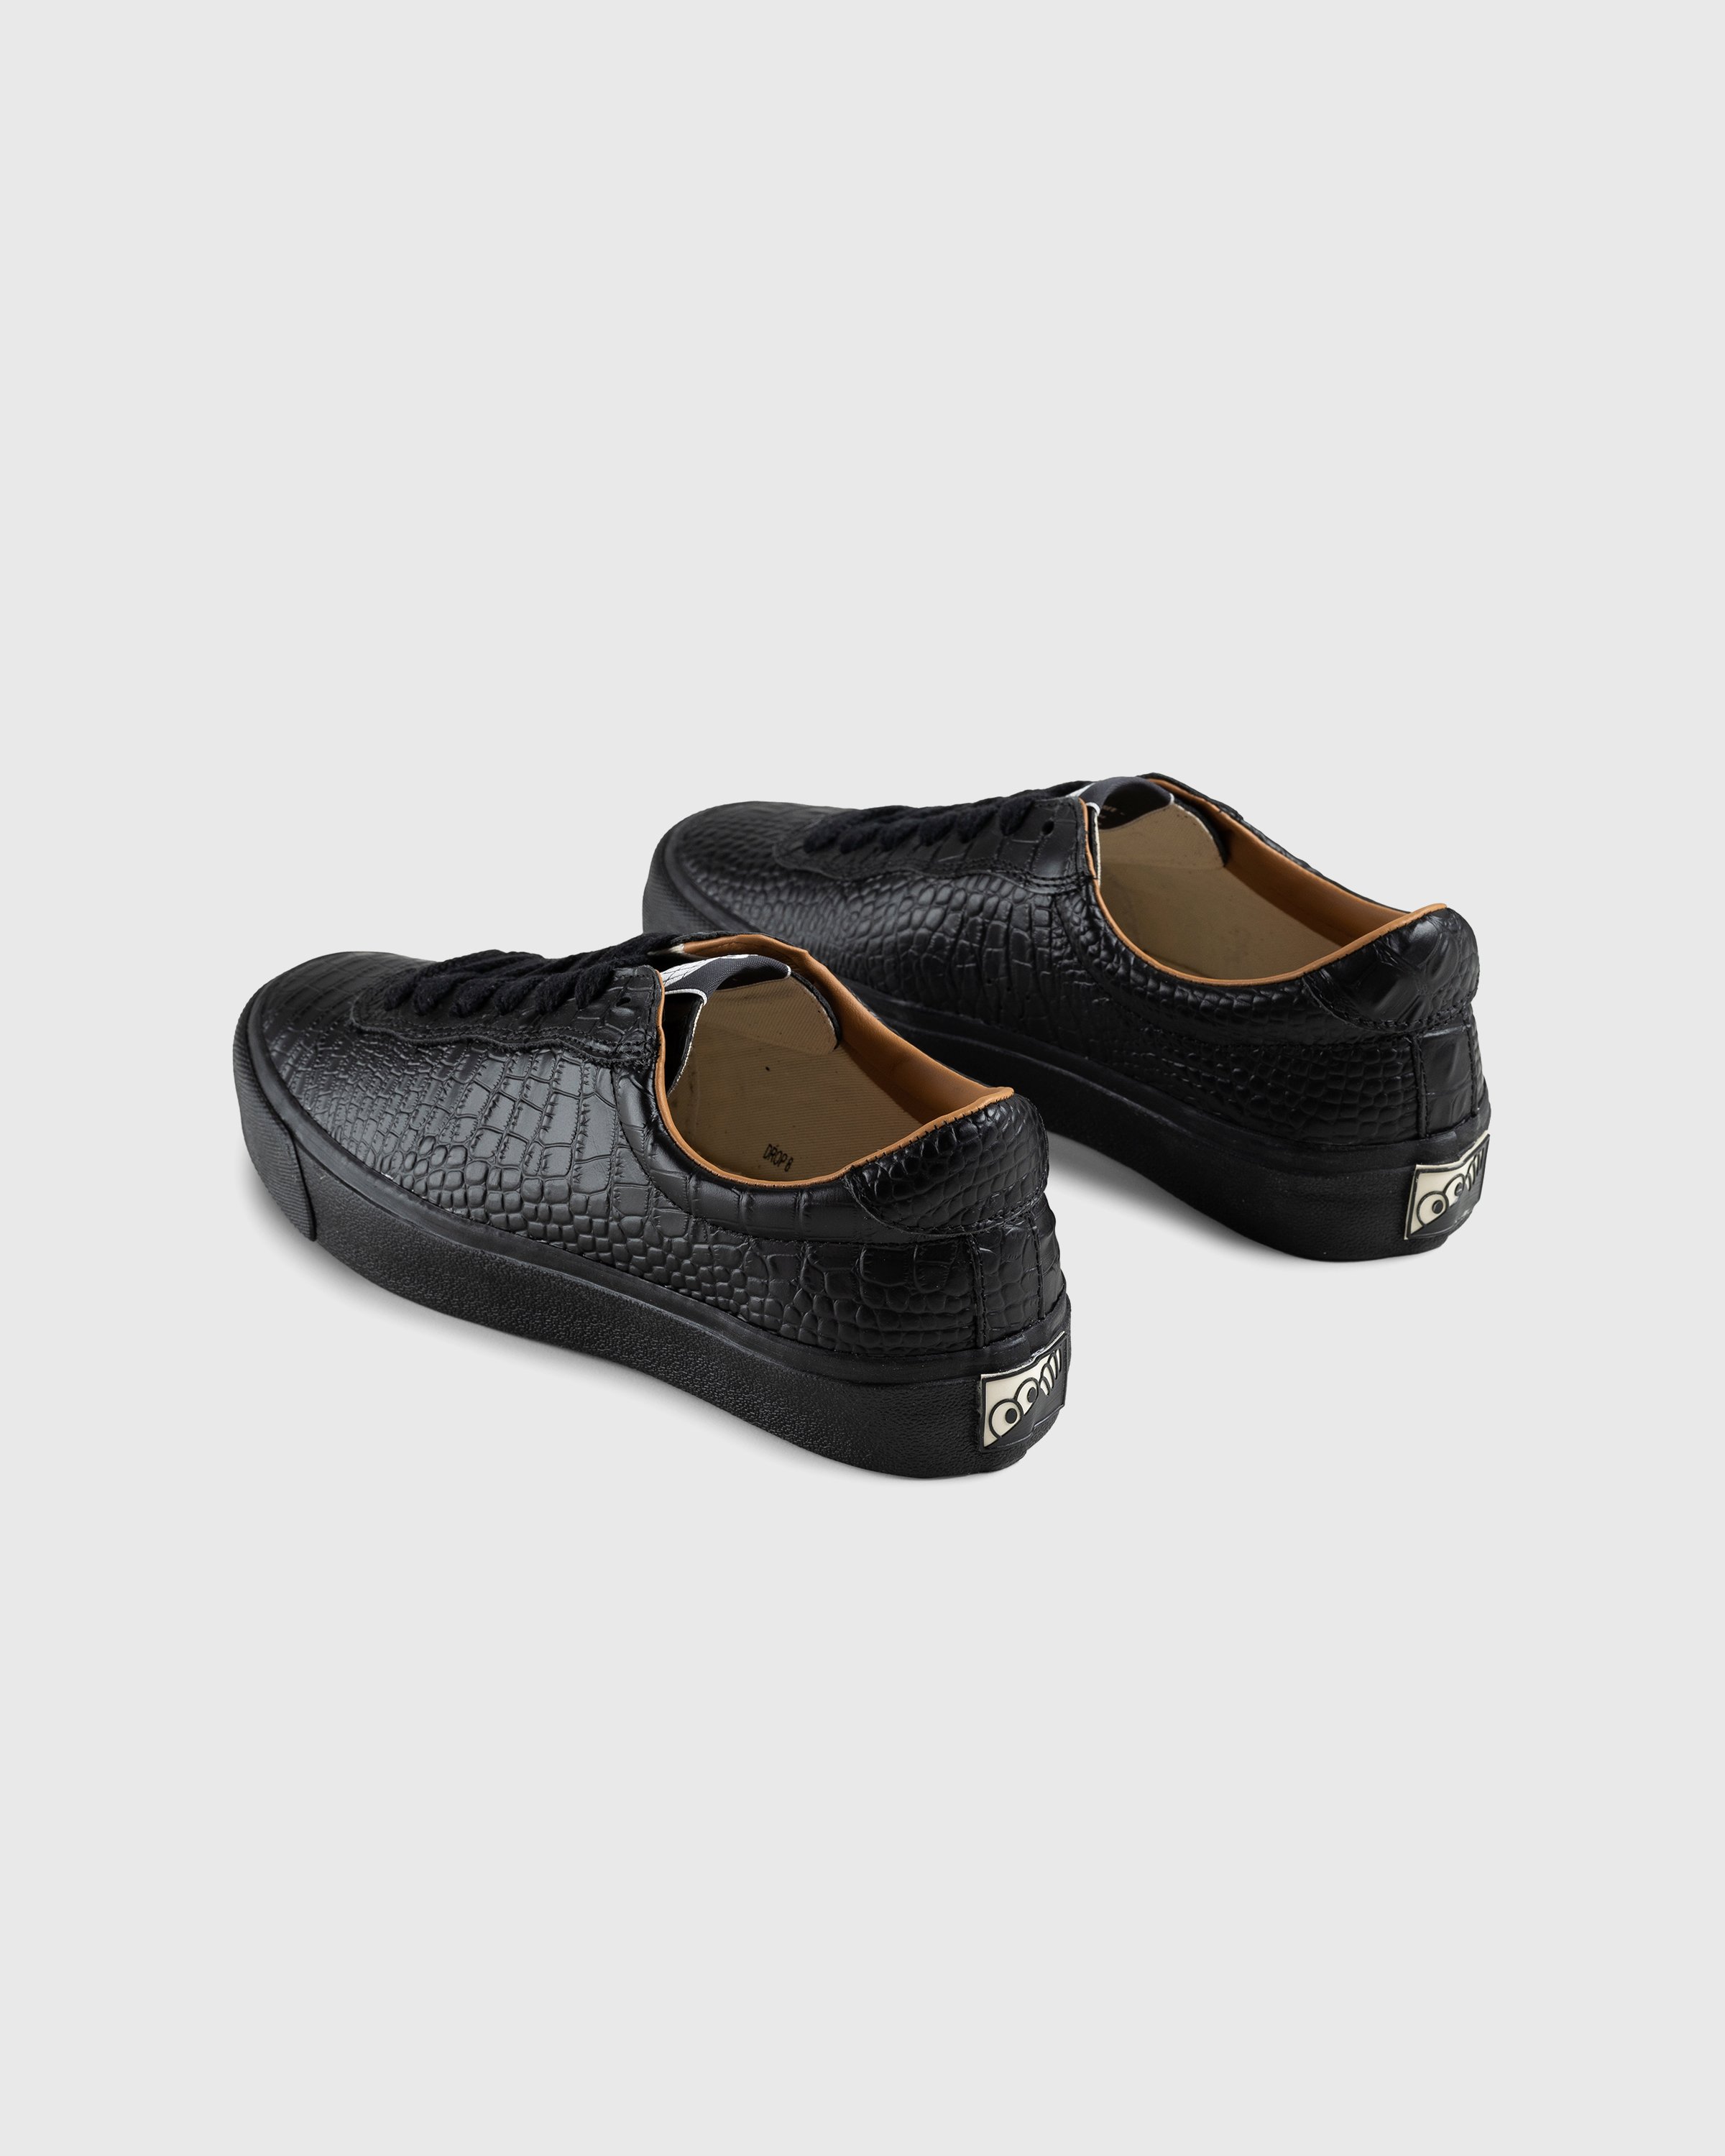 Last Resort AB - VM001-Croc LO Black/Black - Footwear - Black - Image 4